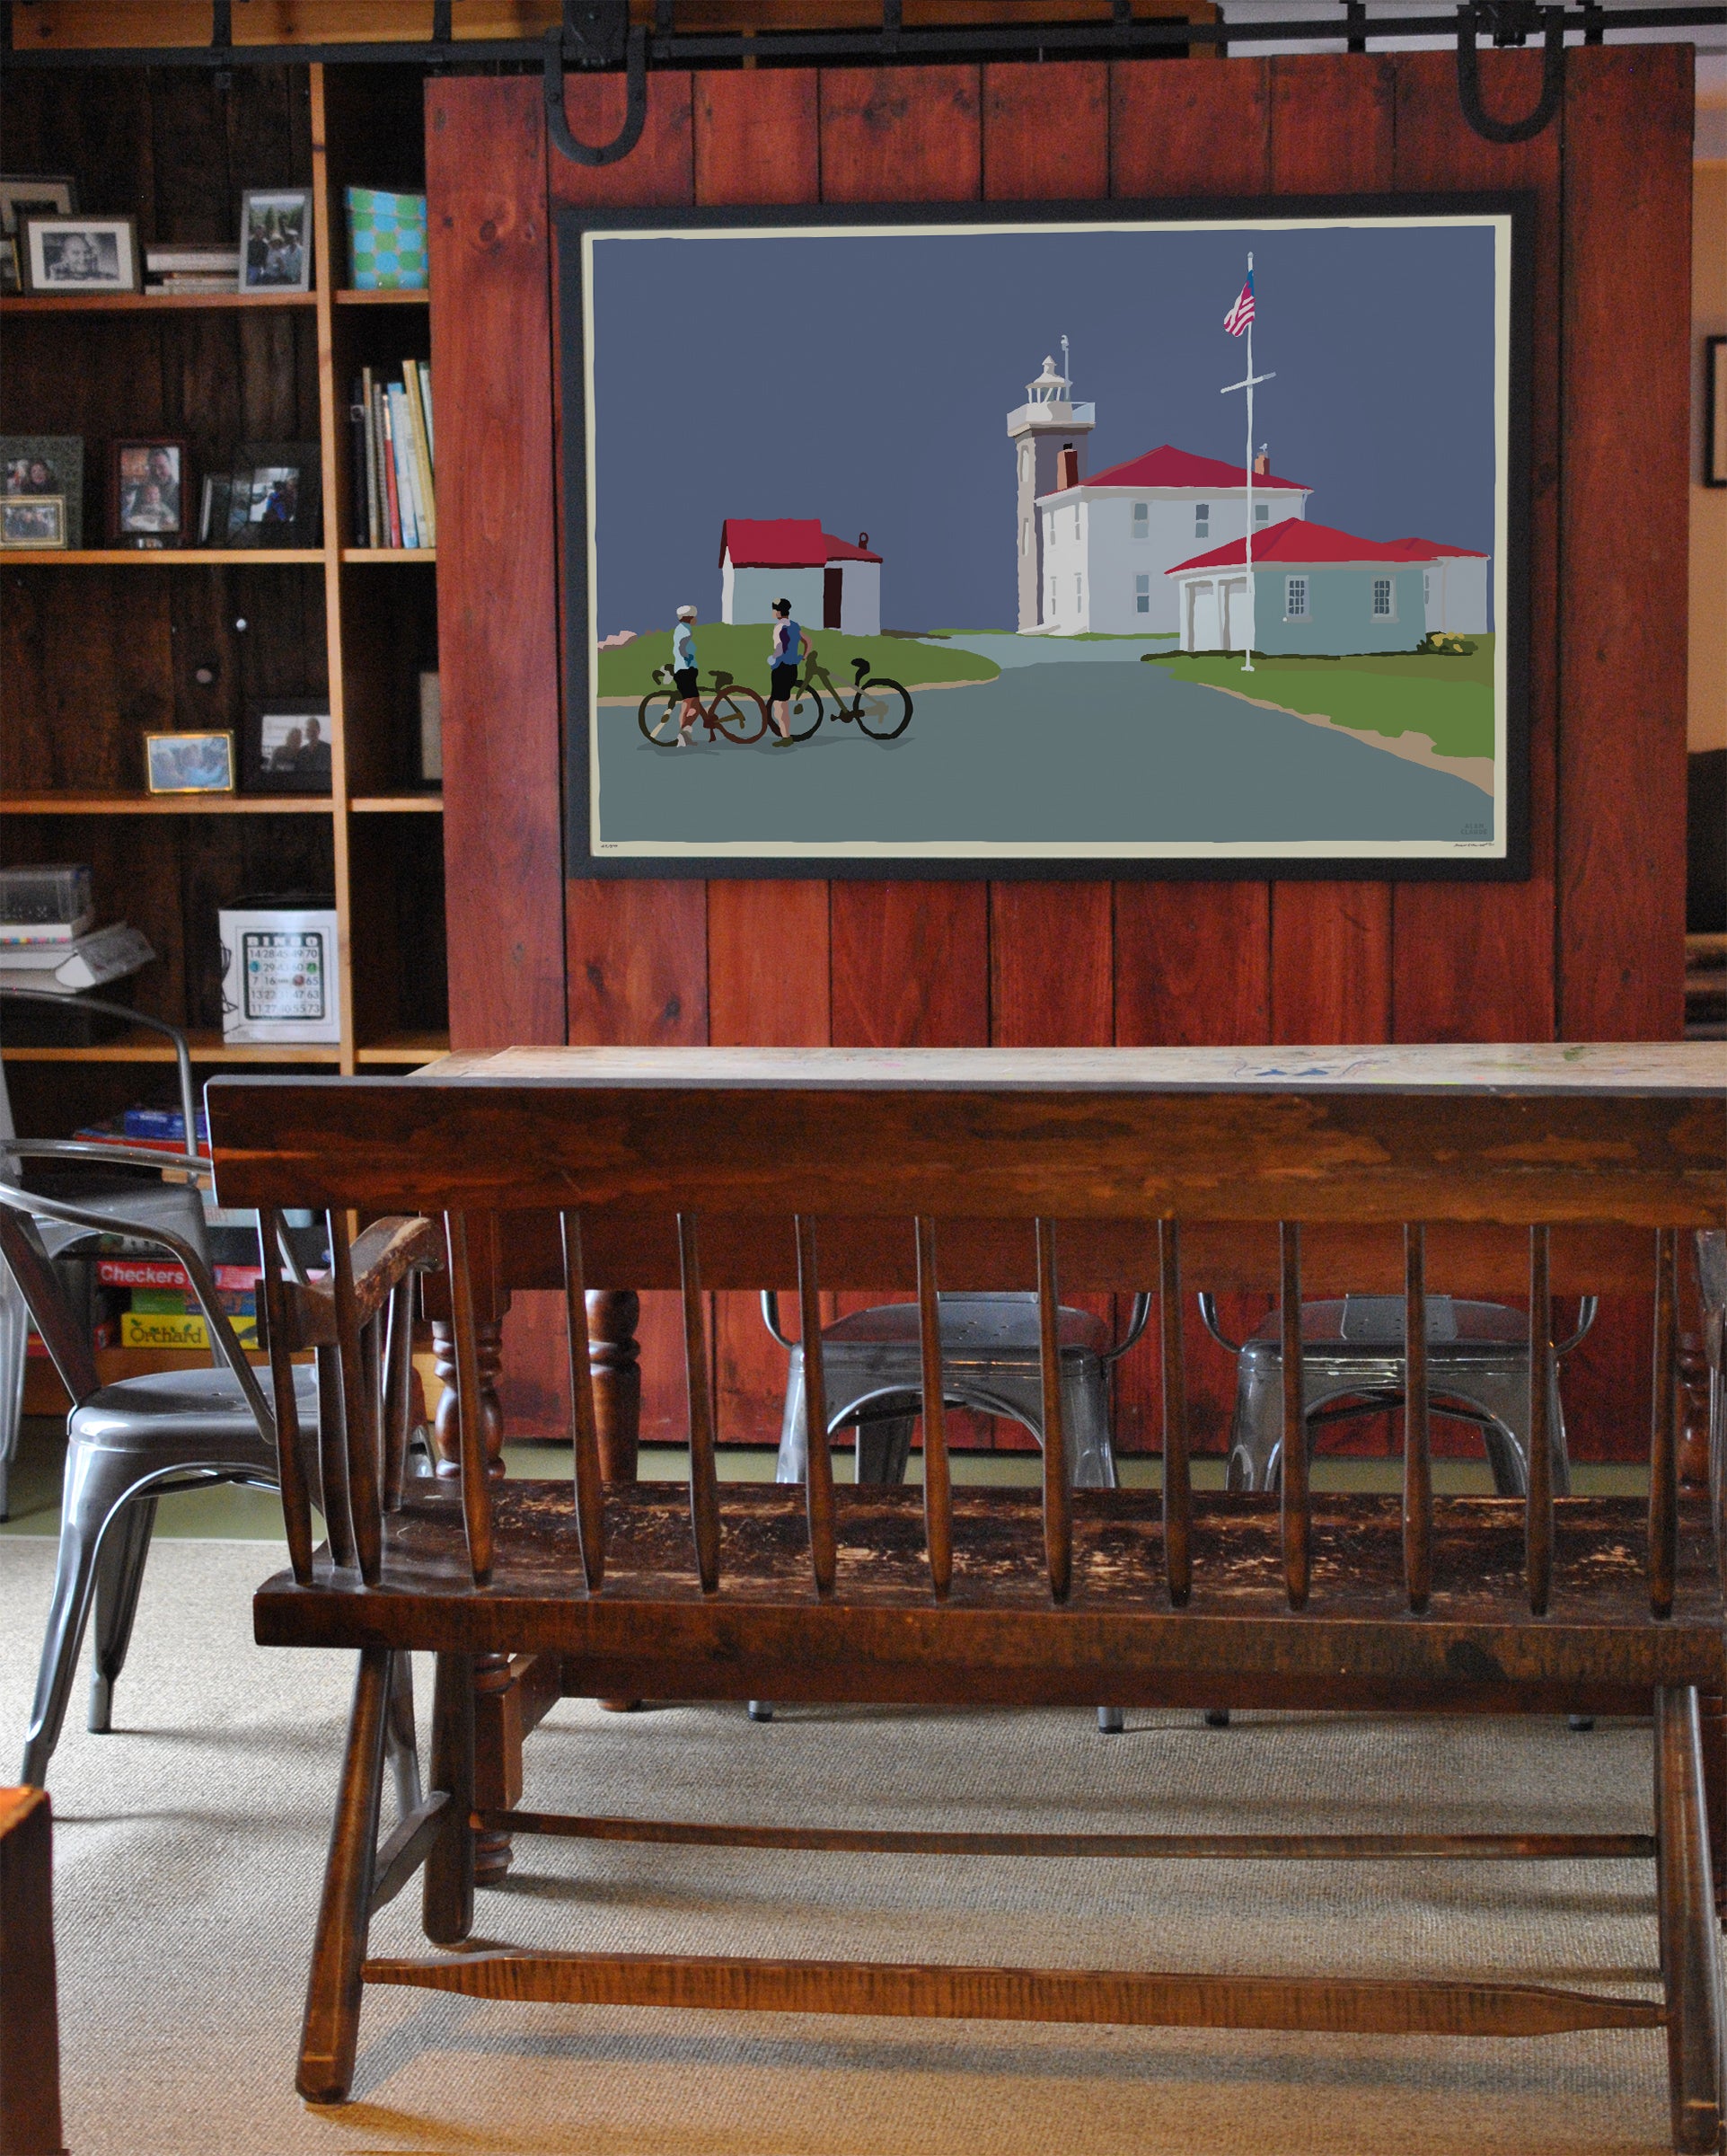 Cyclists at Watch Hill Lighthouse Art Print 36" x 53" Horizontal Framed Wall Poster By Alan Claude - Rhode Island